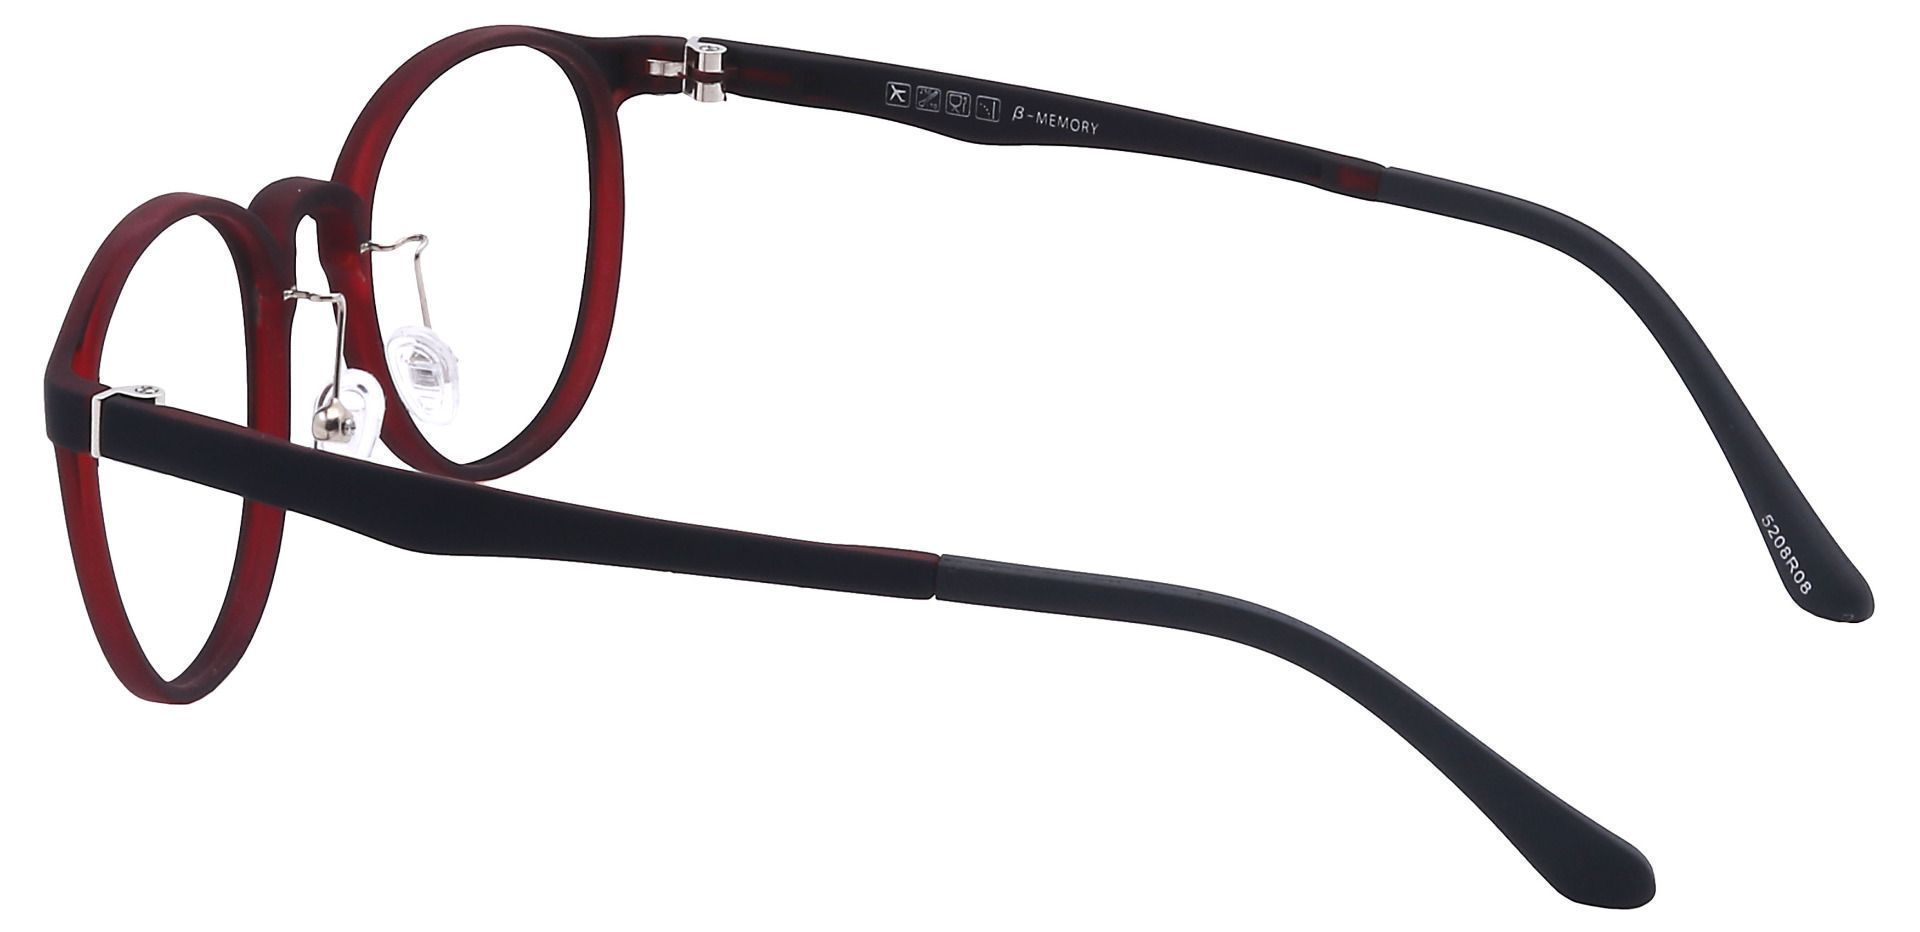 Nimbus Oval Progressive Glasses - Red